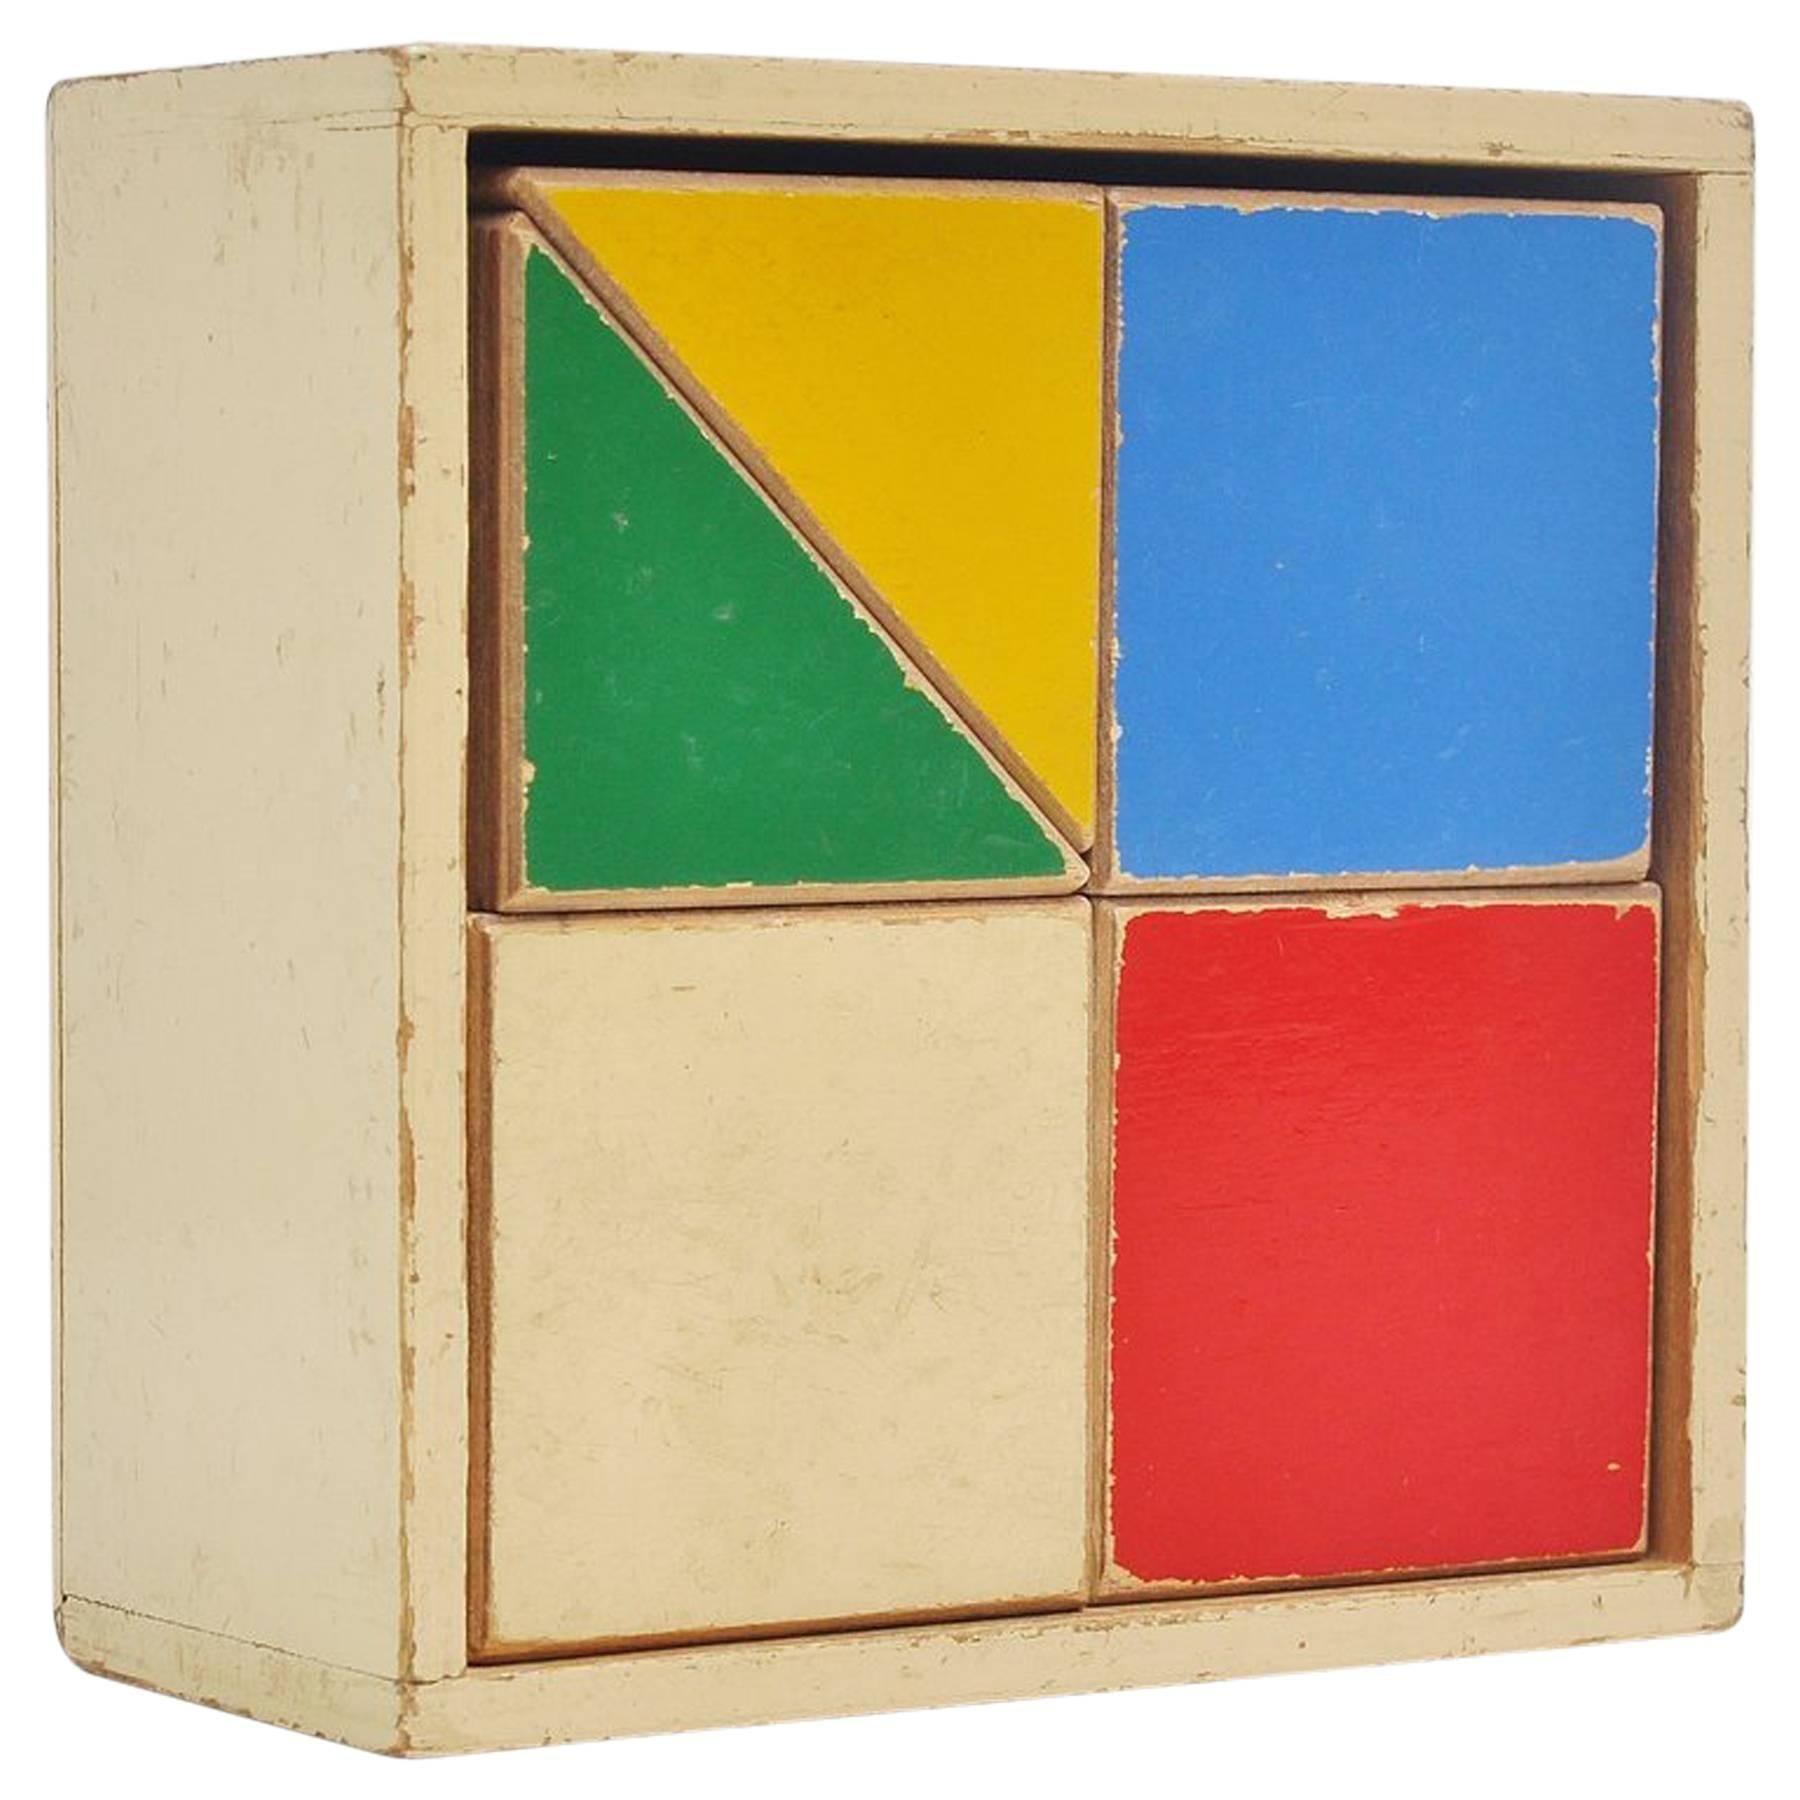 ADO Ko Verzuu Puzzle Box Decorative Kids Toy, 1950